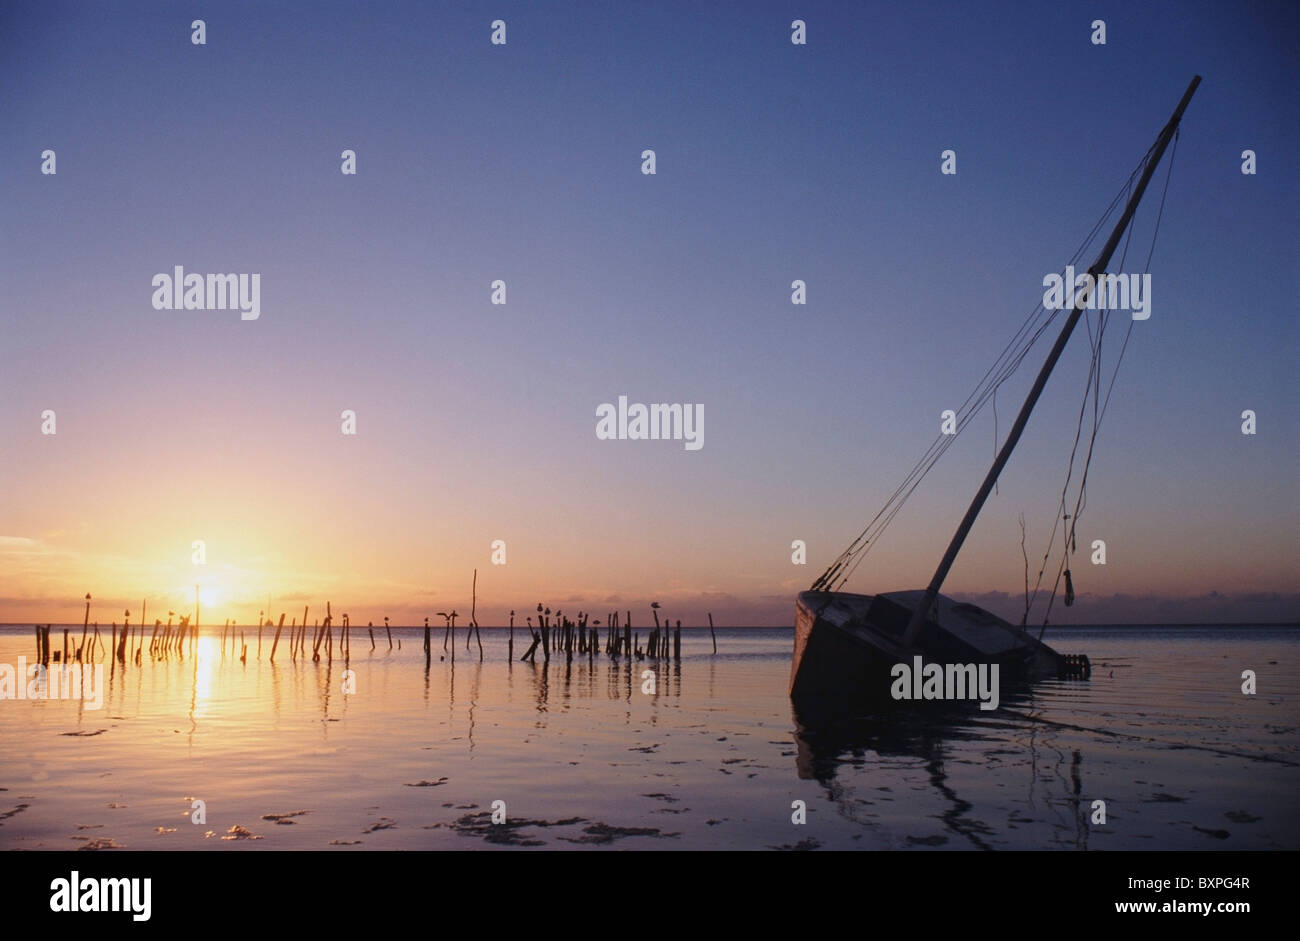 Parzialmente sommerse e Keeling barca vela in Silhouette al tramonto Foto Stock